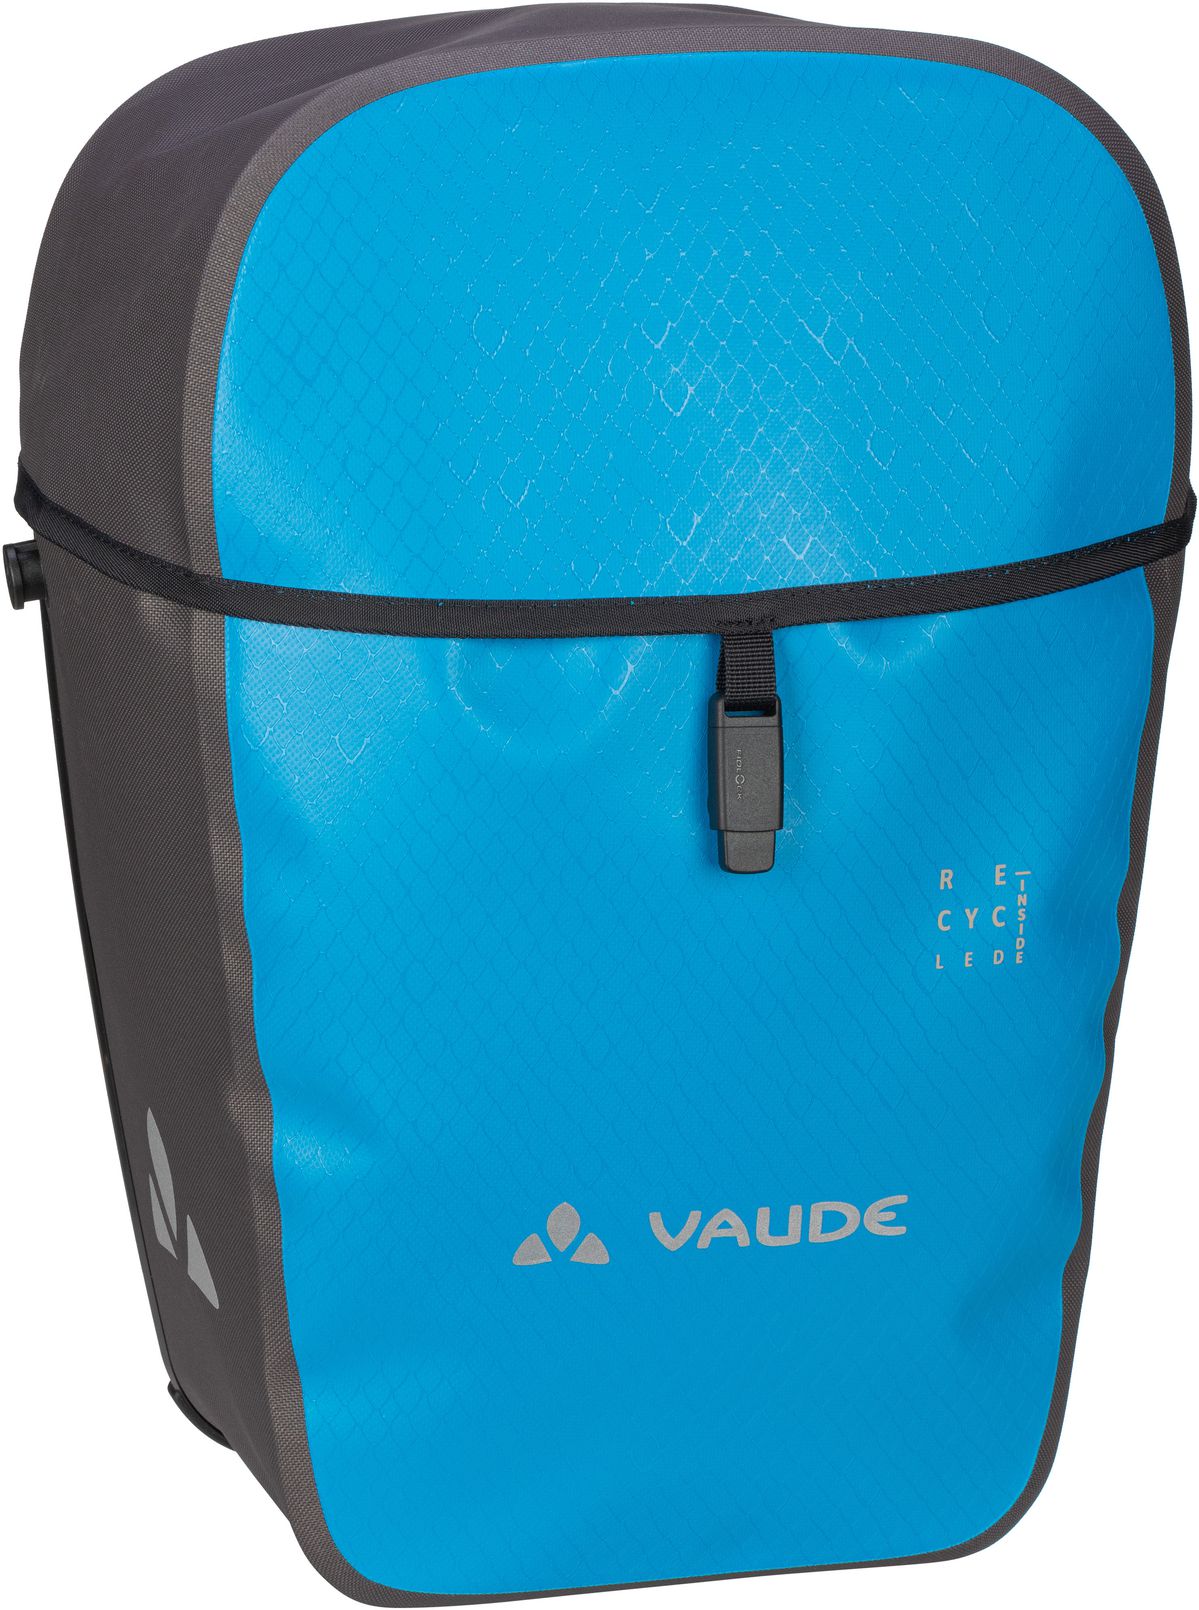 Vaude Aqua Commute Single  in Blau (24 Liter), Fahrradtasche